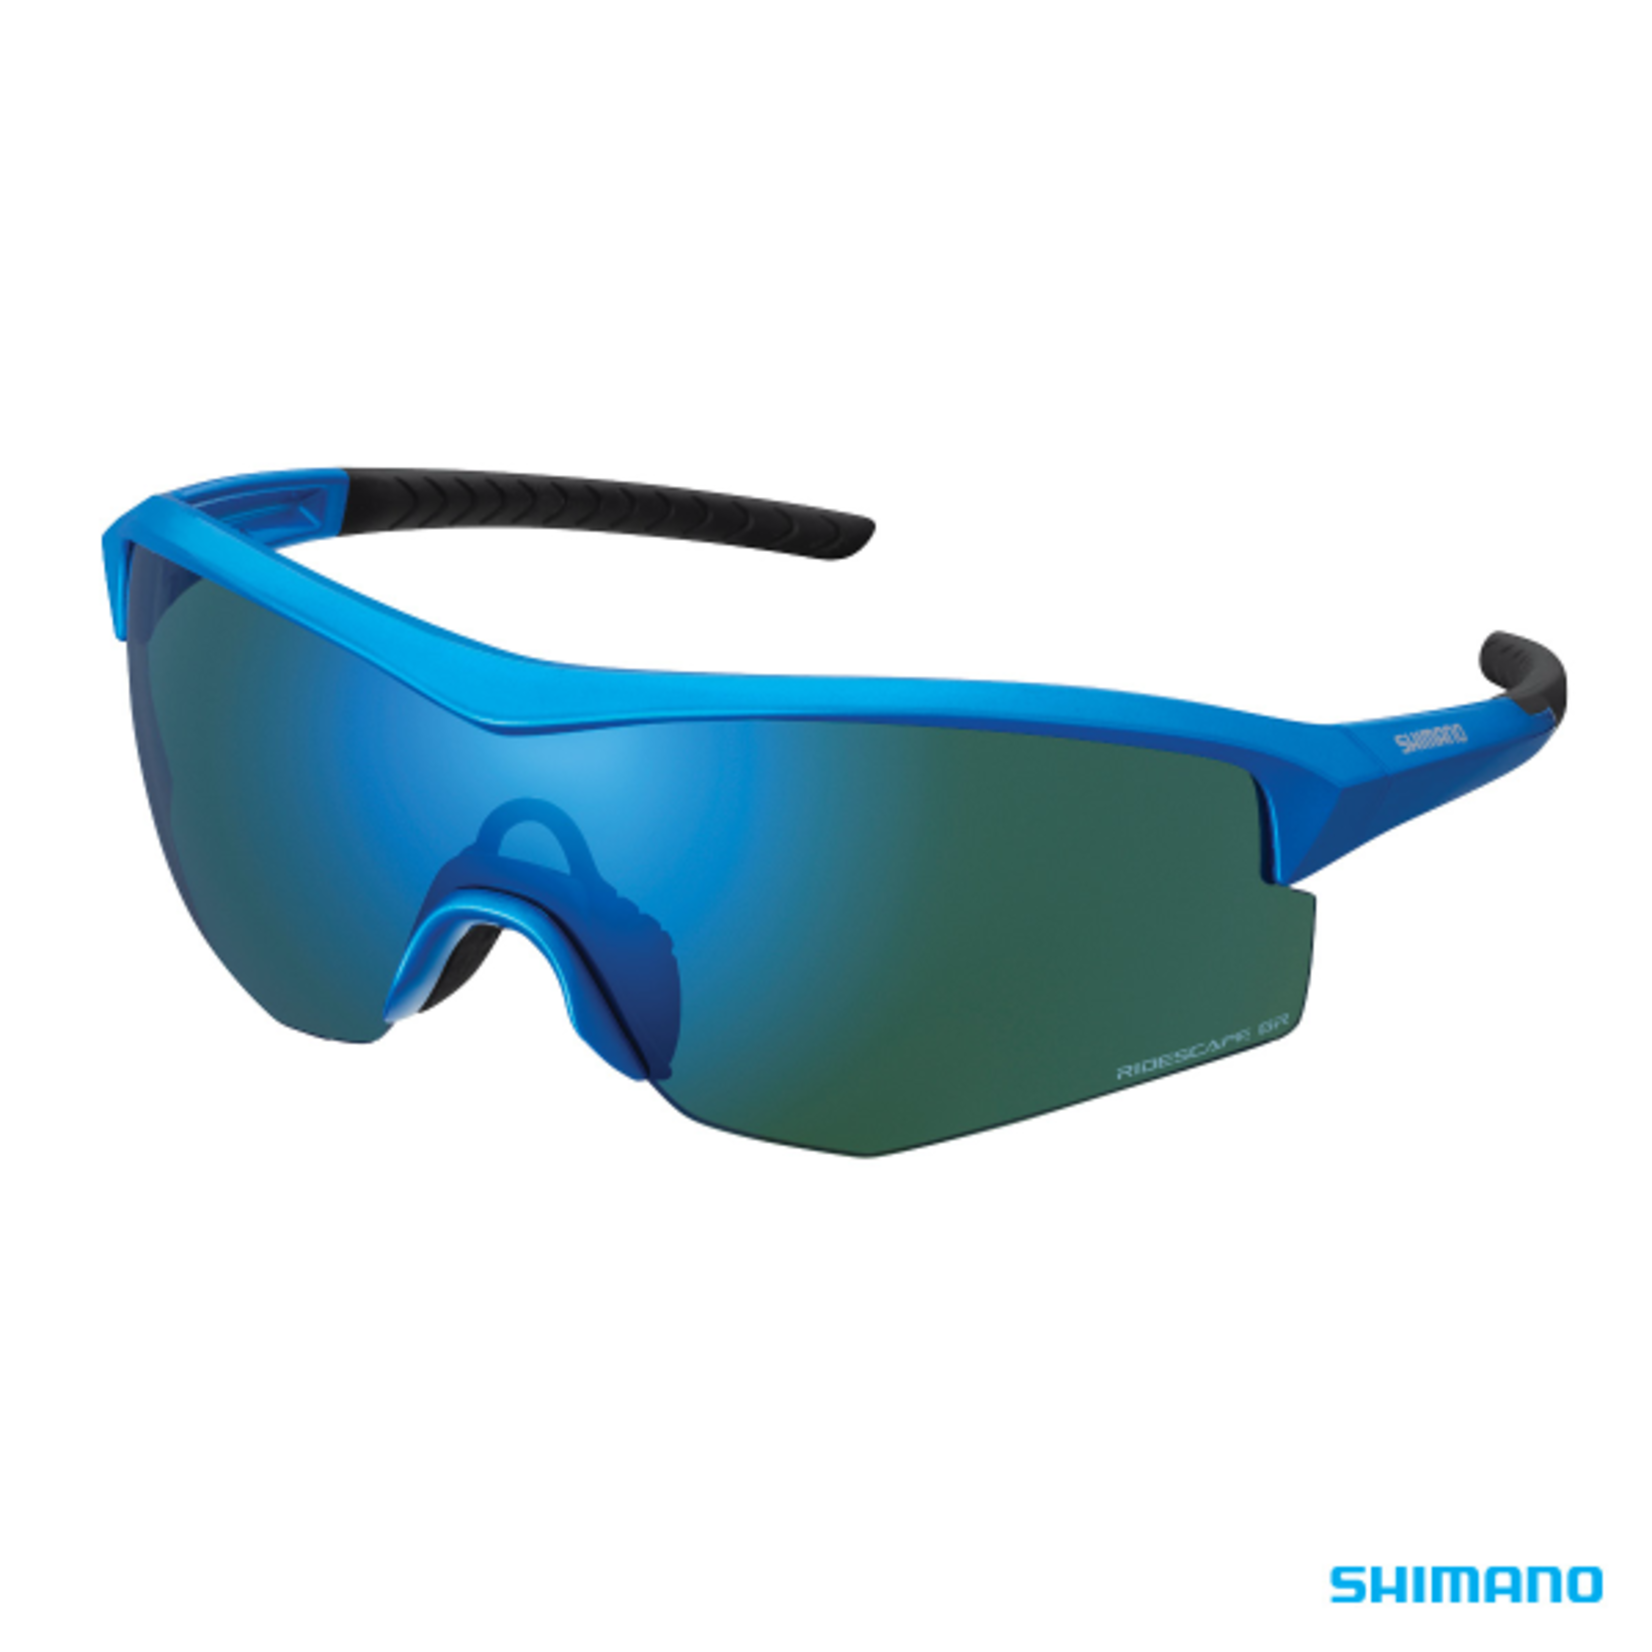 Shimano Shimano Eyewear - CE-Spark - Candy Blue - Ridescape Gravel Sunglasses